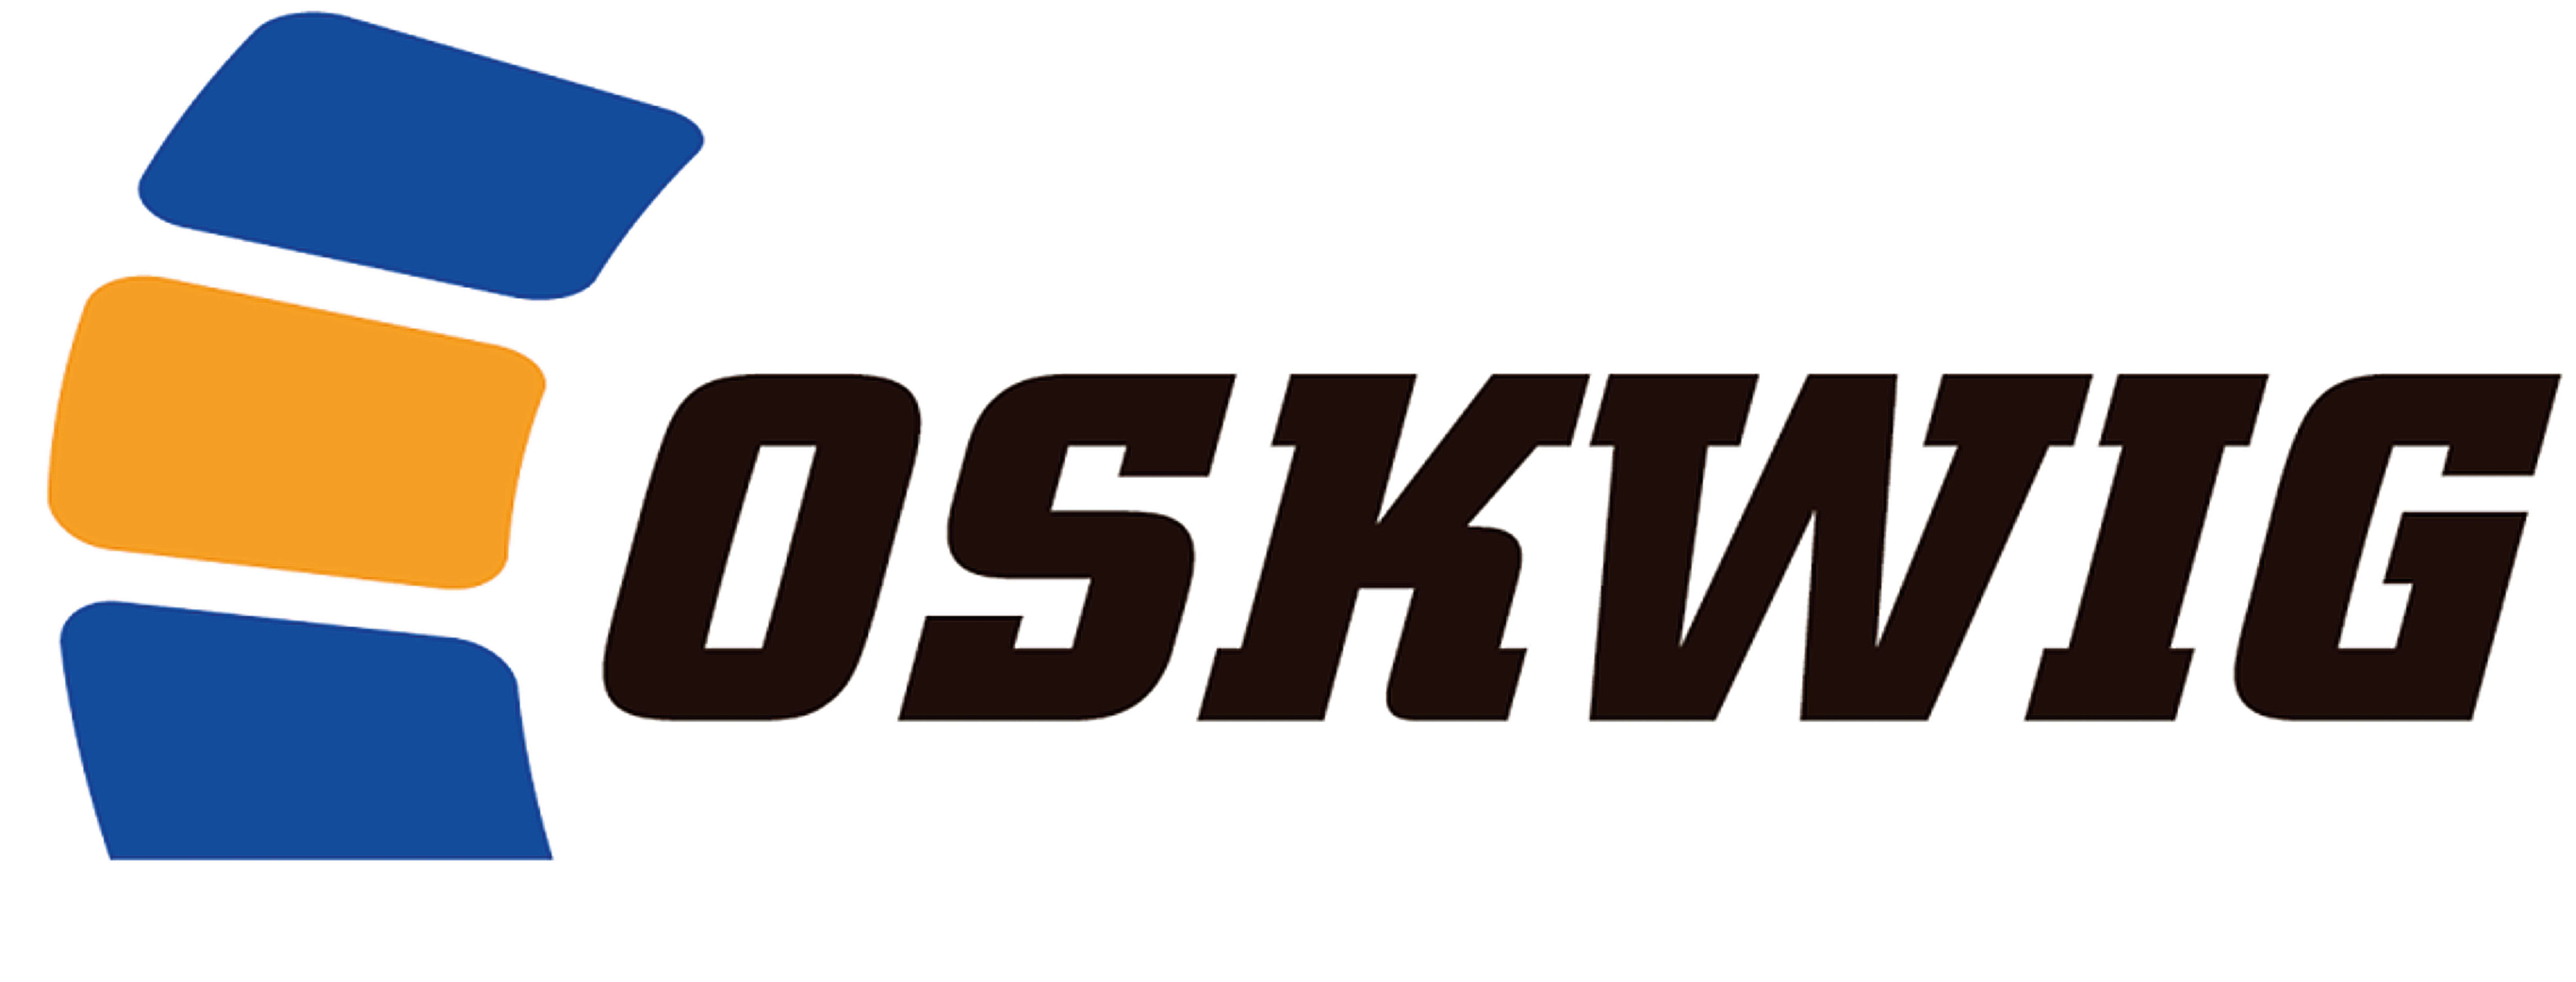 Oskwig logo 2020.jpg